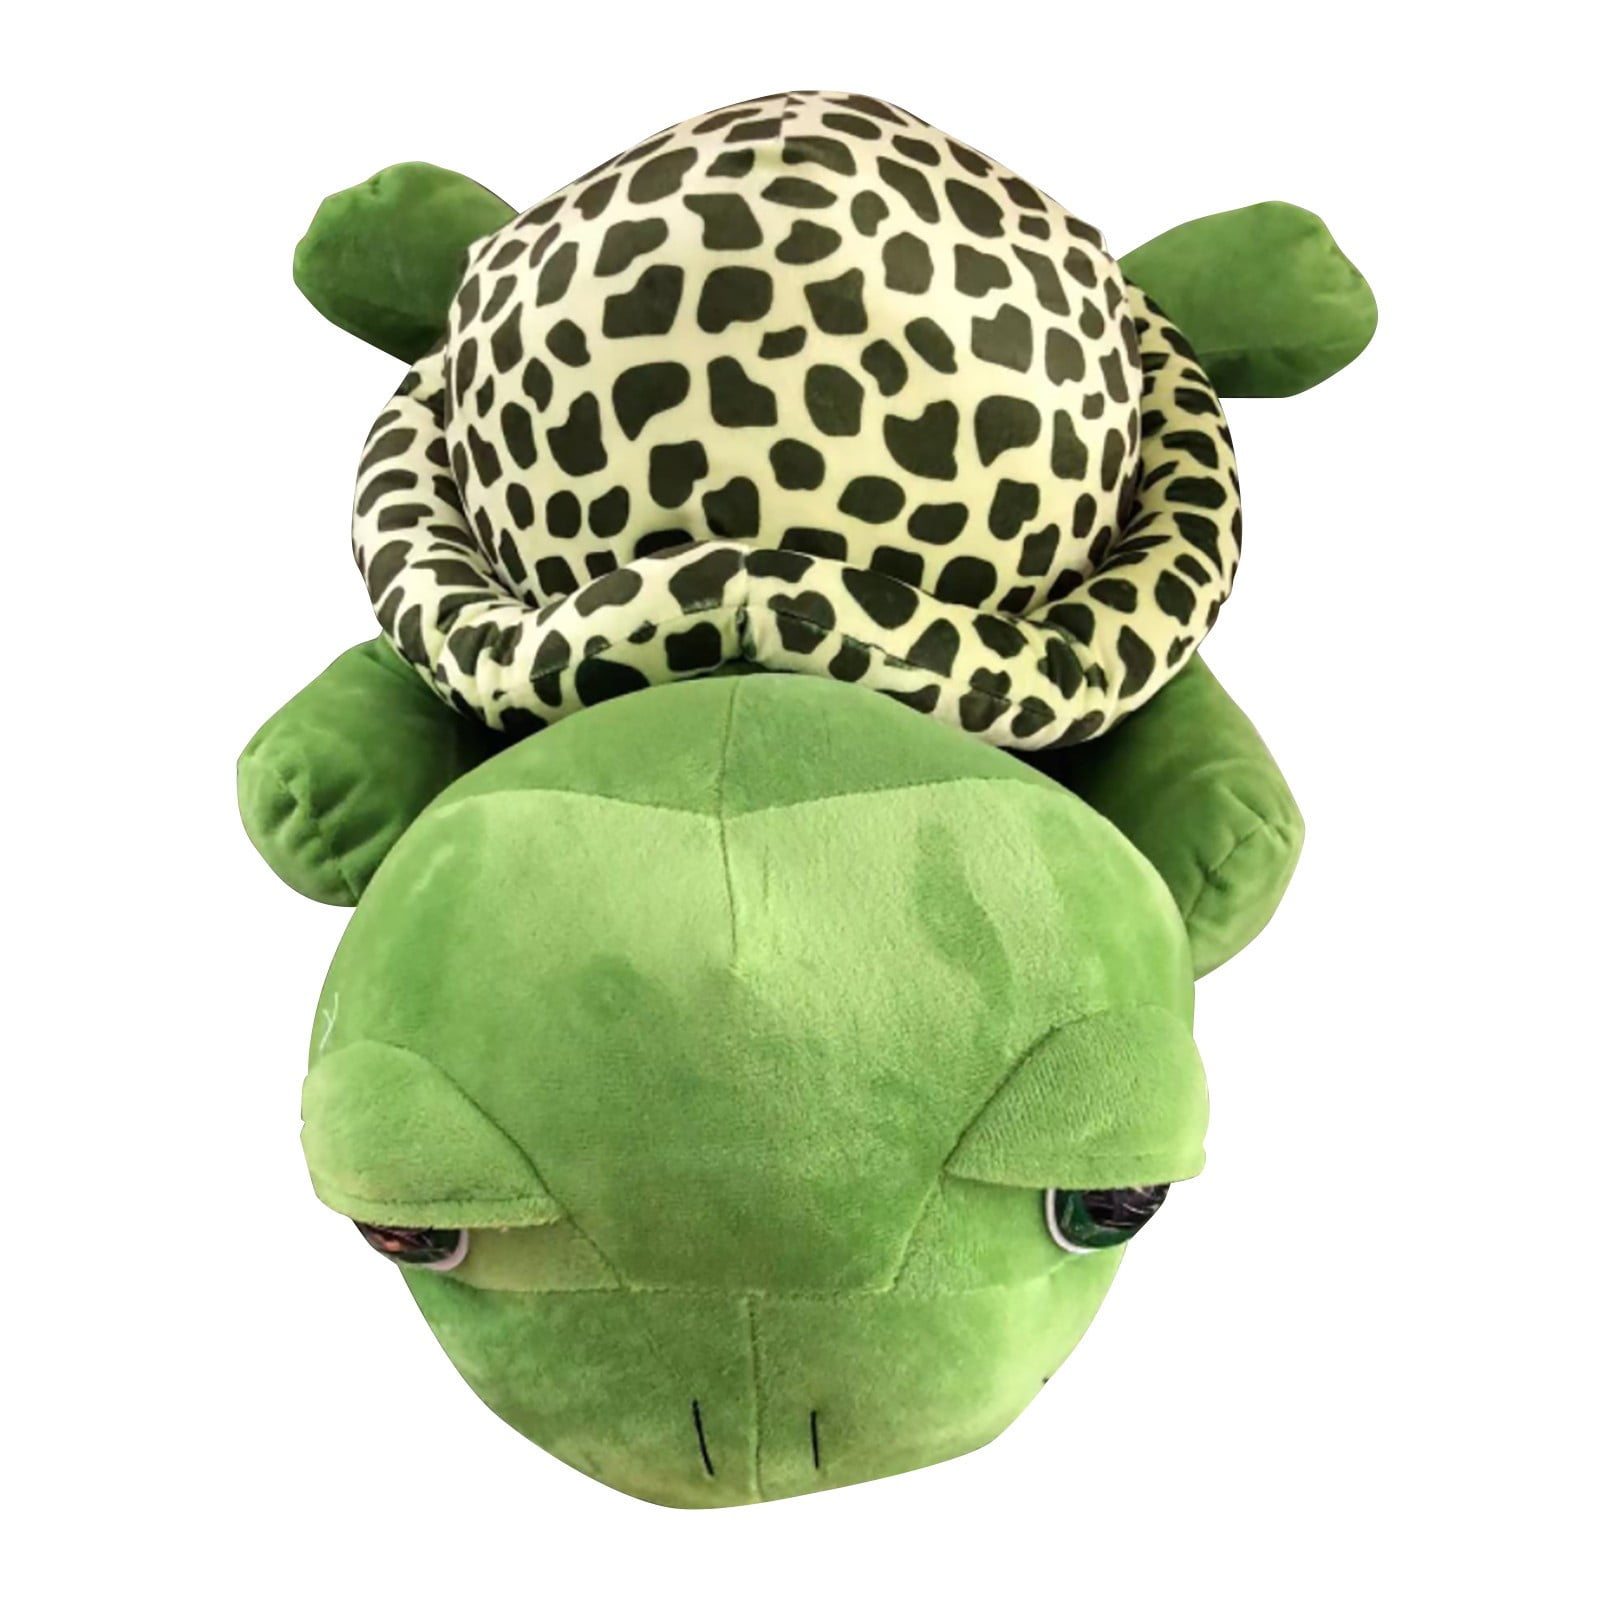 New 7" Big Eye Tortoise Toy Turtle Stuffed Plush Doll Soft Hug Pillow Gift Decor 